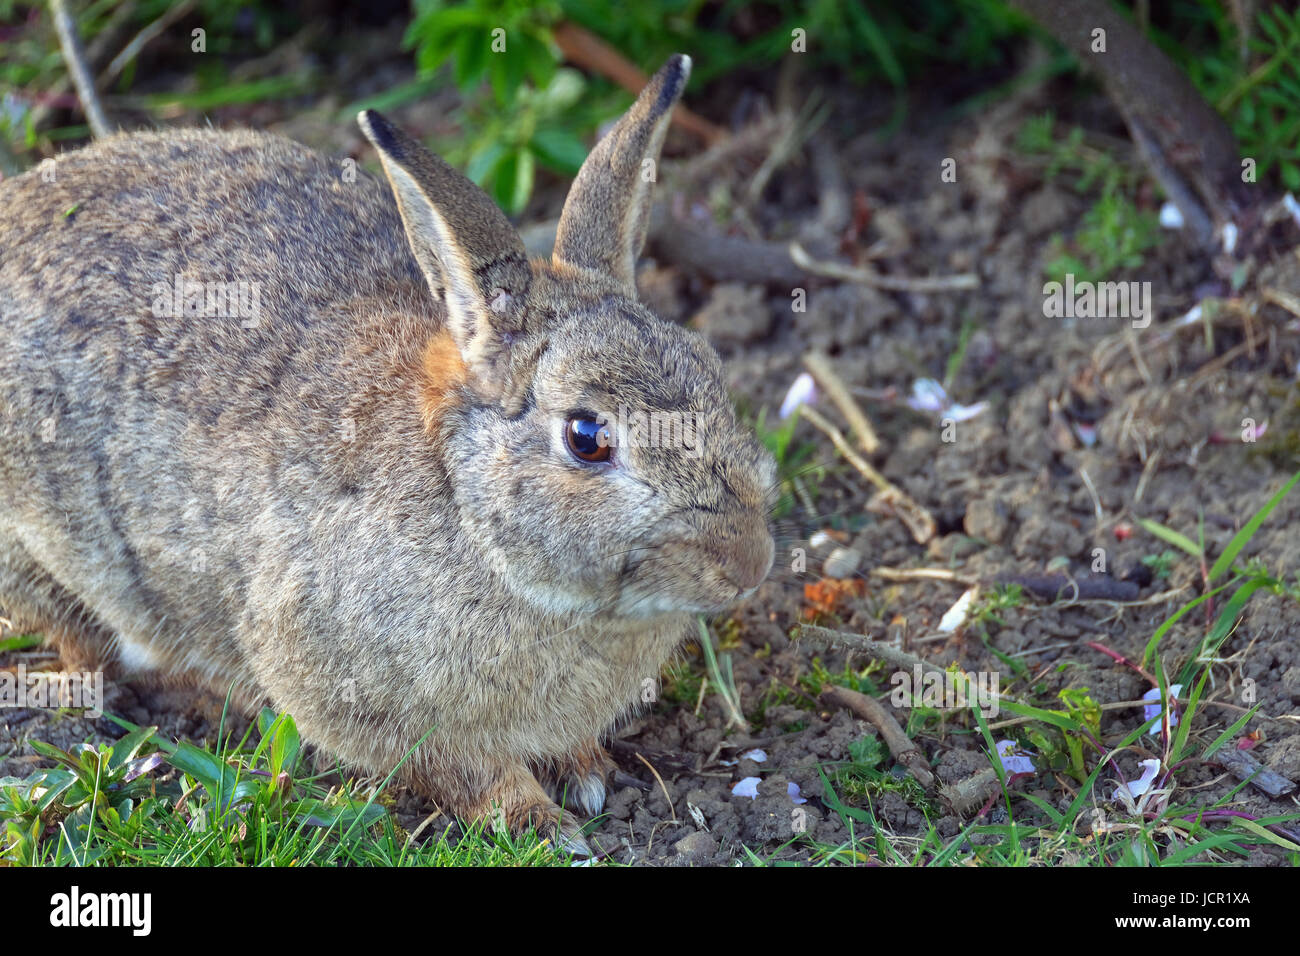 Commonadult Rabbit on grass. Stock Photo